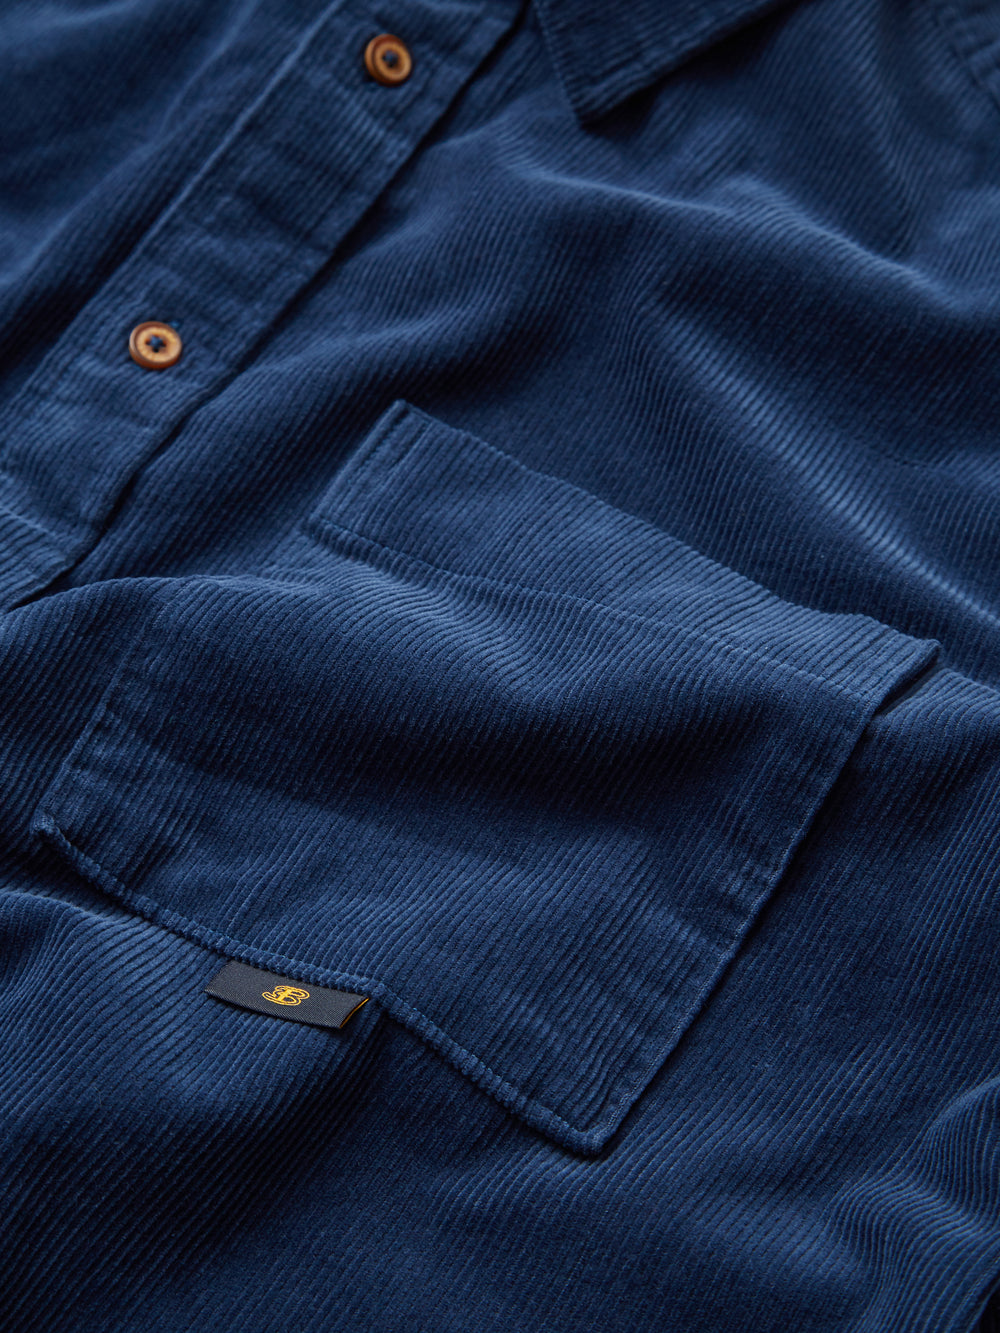 Ben Sherman - Corduroy Shirt - Dark Blue